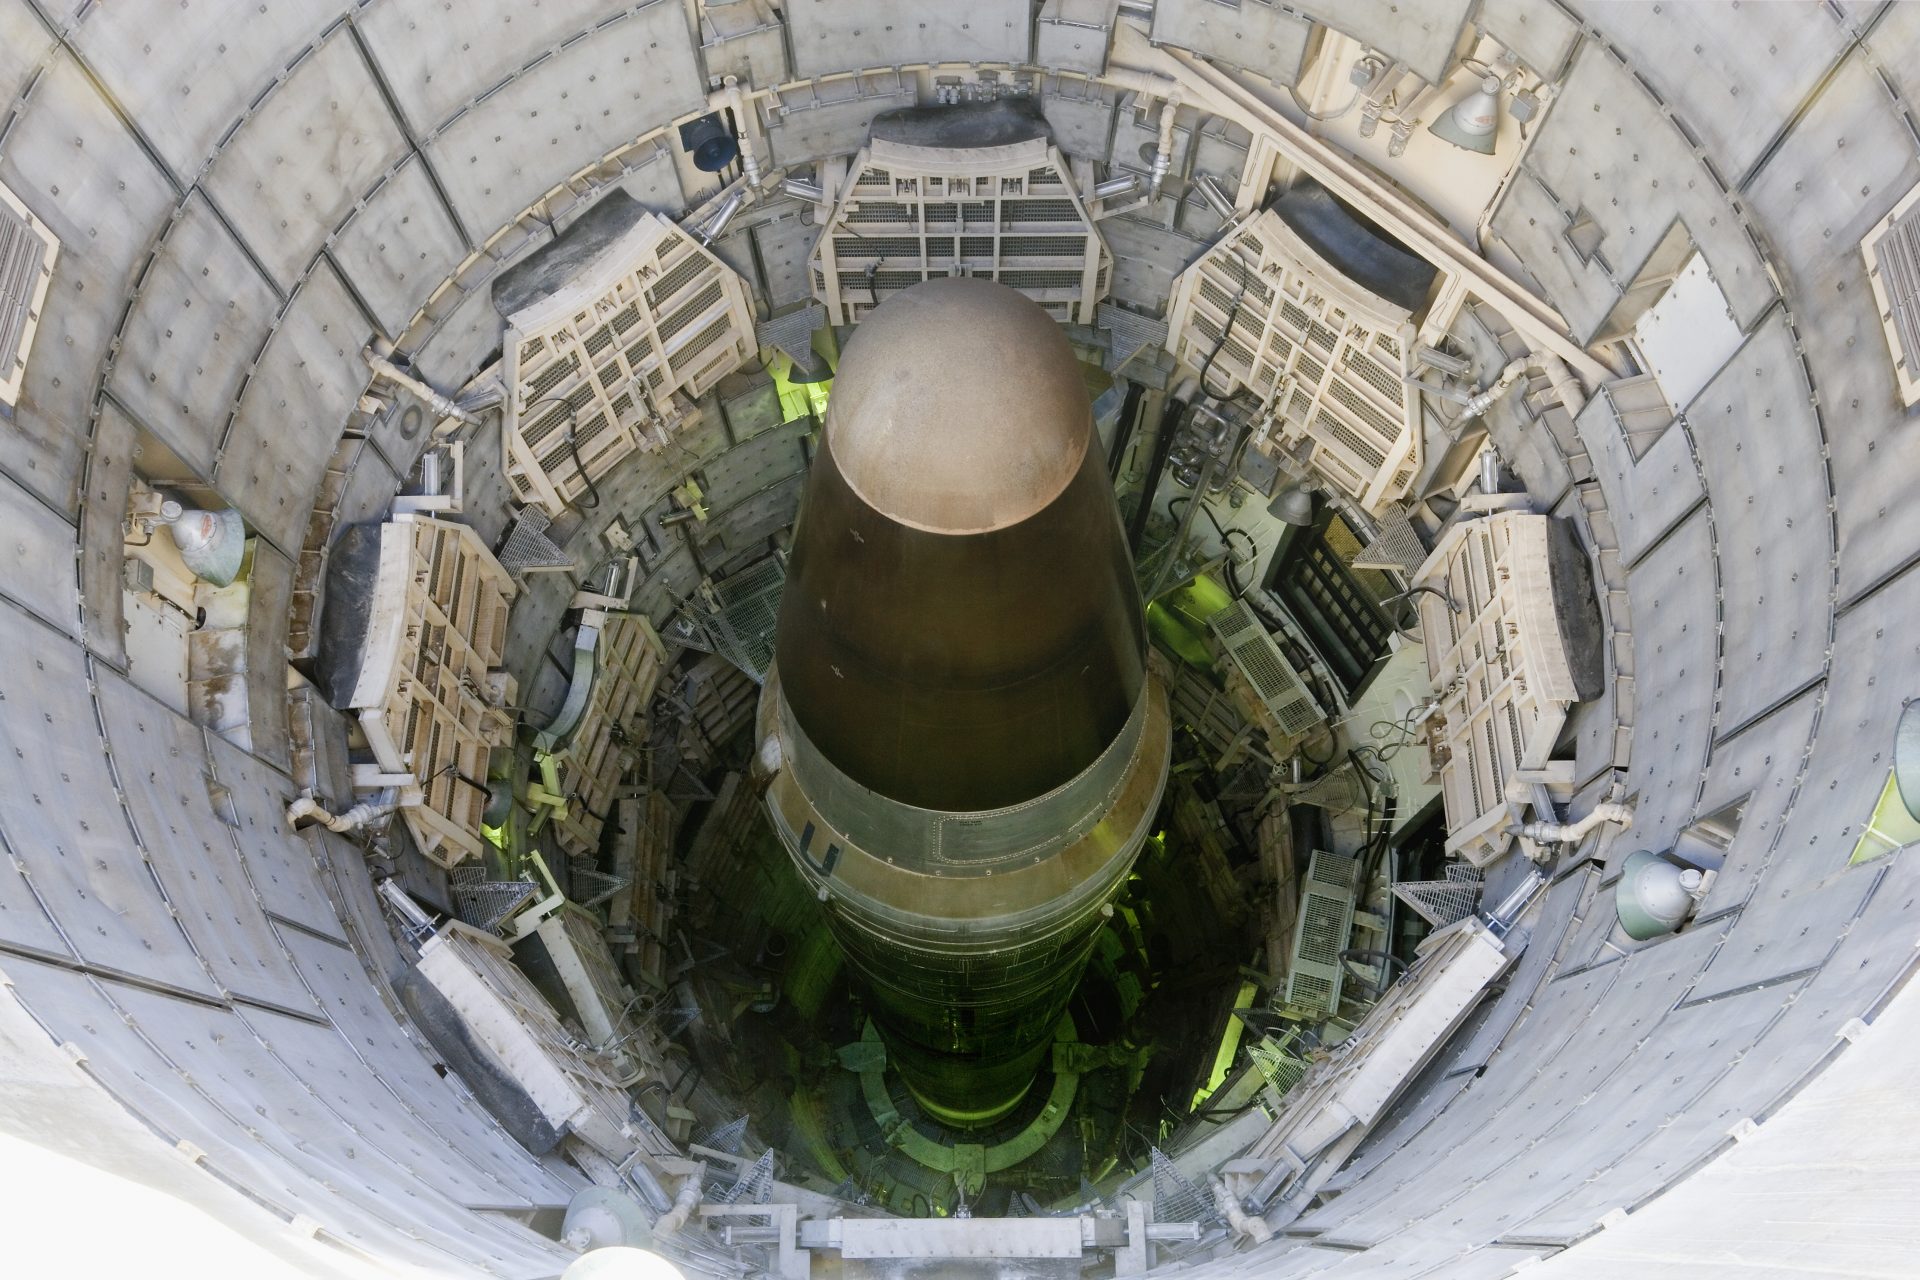 A new global nuclear arms race?